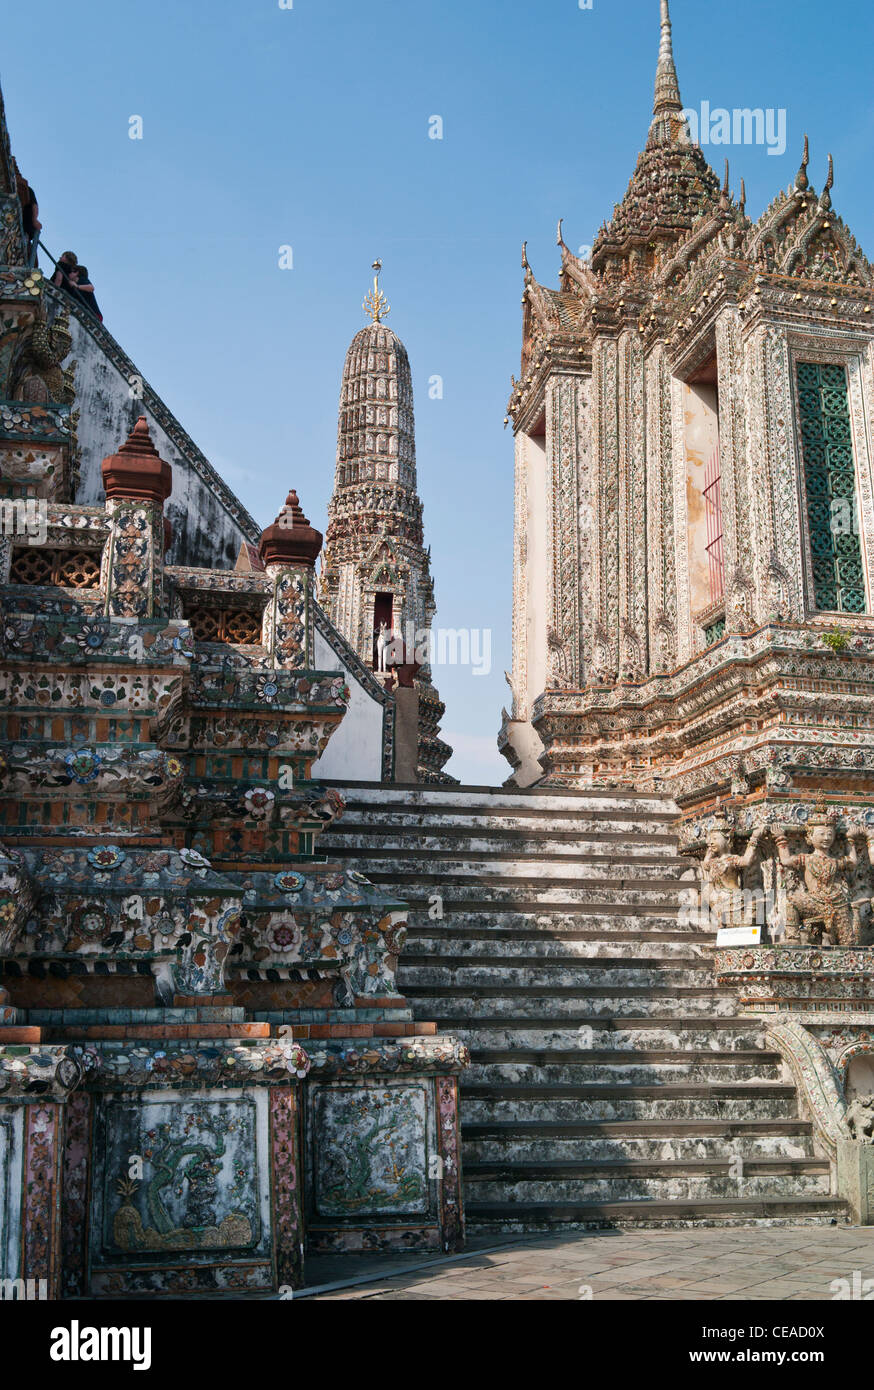 Wat Arun Temple or the Temple of the Dawn,  Bangkok, Thailand. Stock Photo